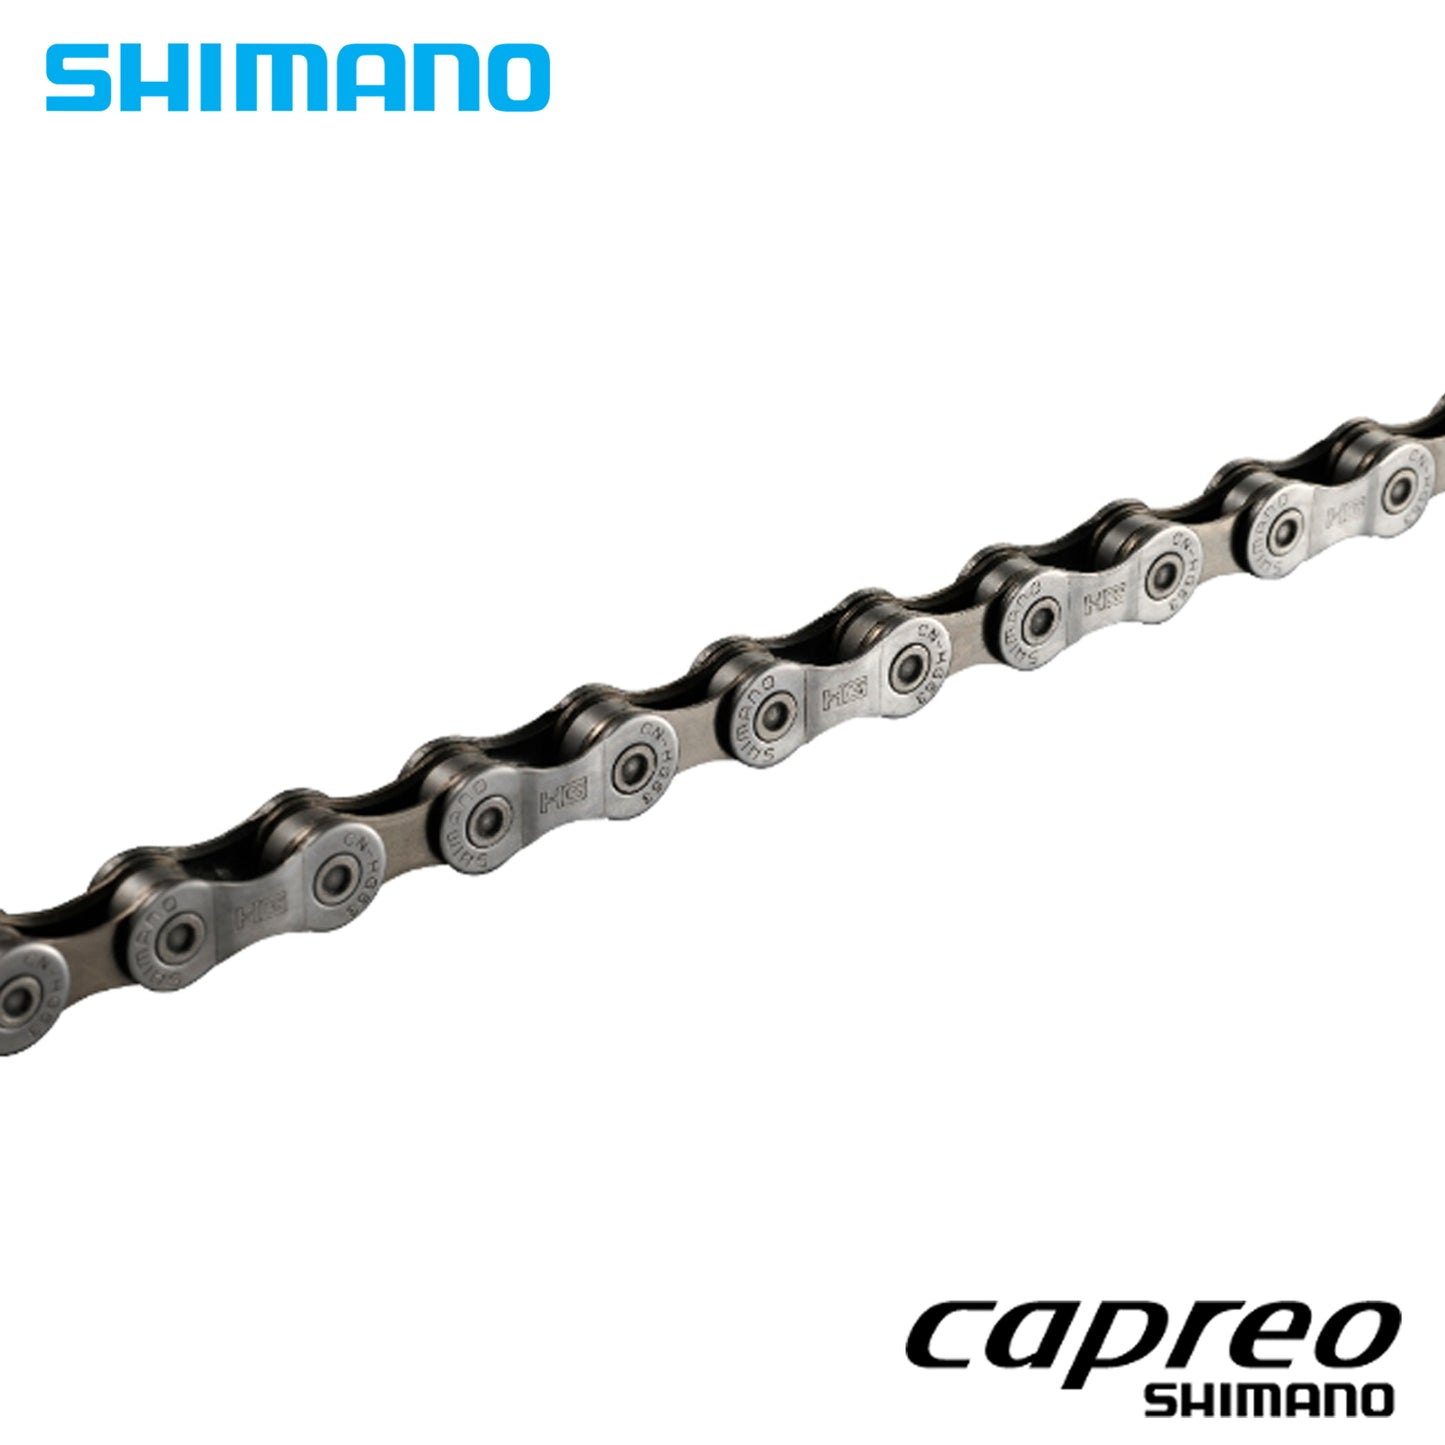 Shimano Capreo F800 CN-HG53 9-Speed - Super Narrow - HYPERGLIDE - Chain 116 Links